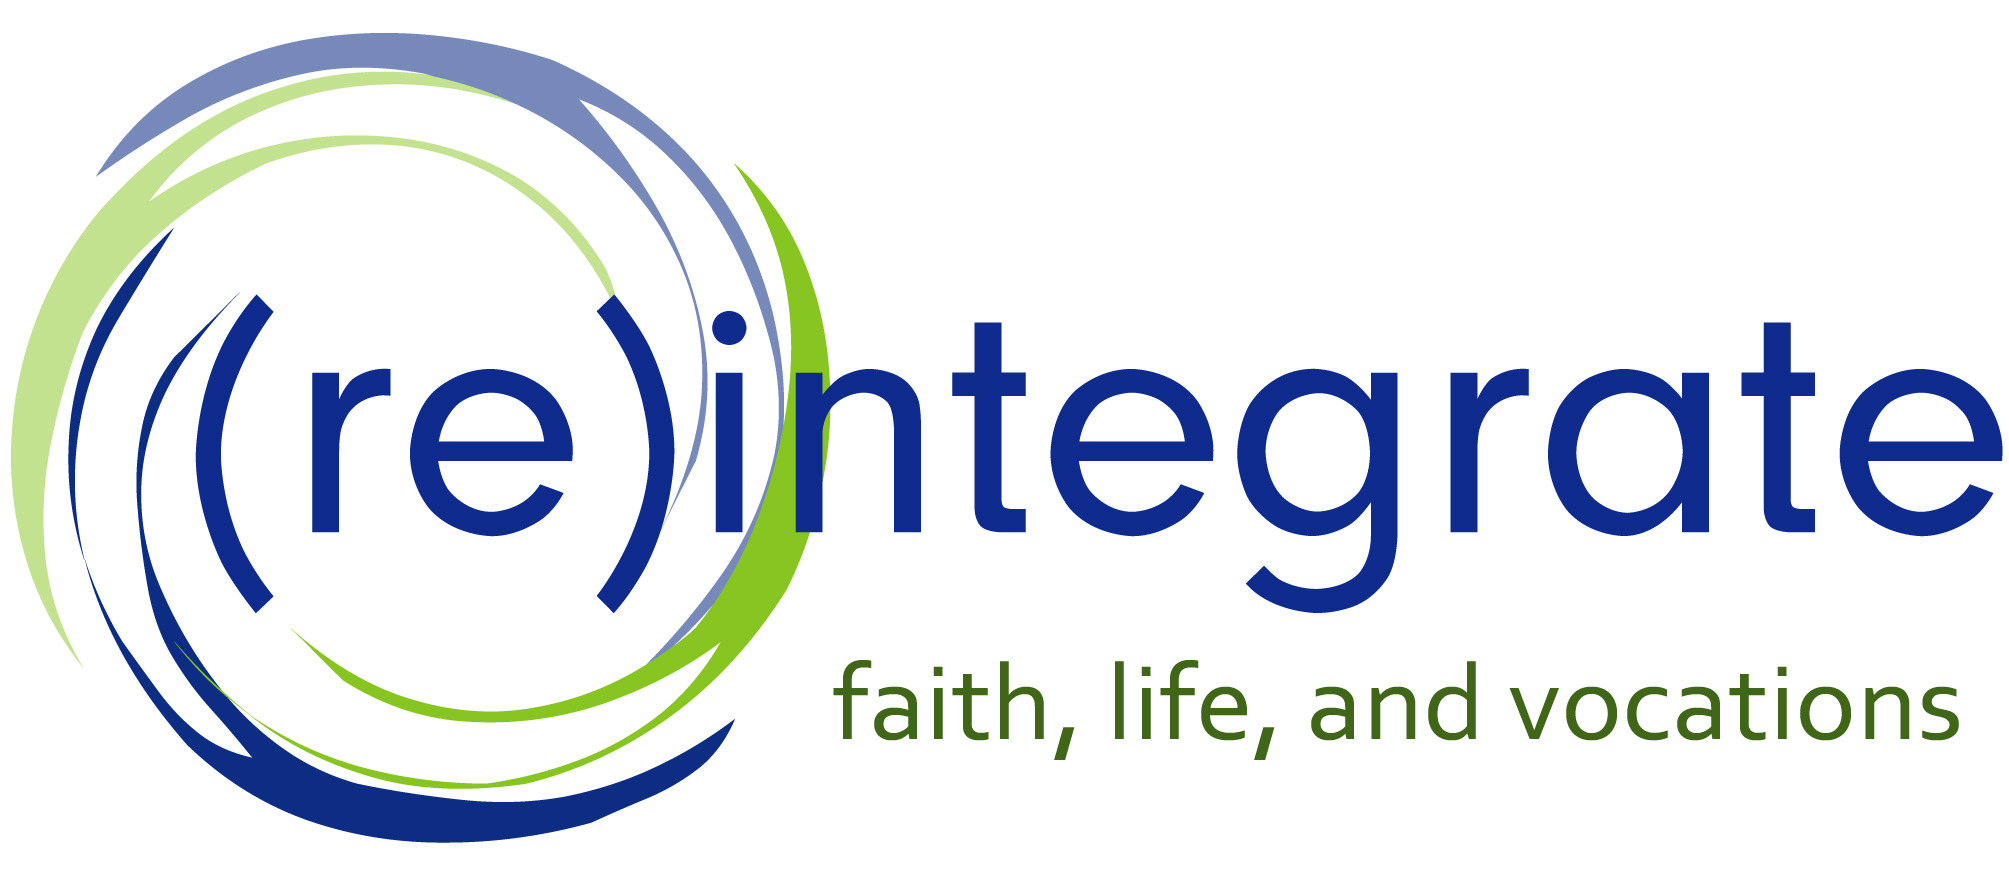 Reintegrate-w-faith-life-vocations